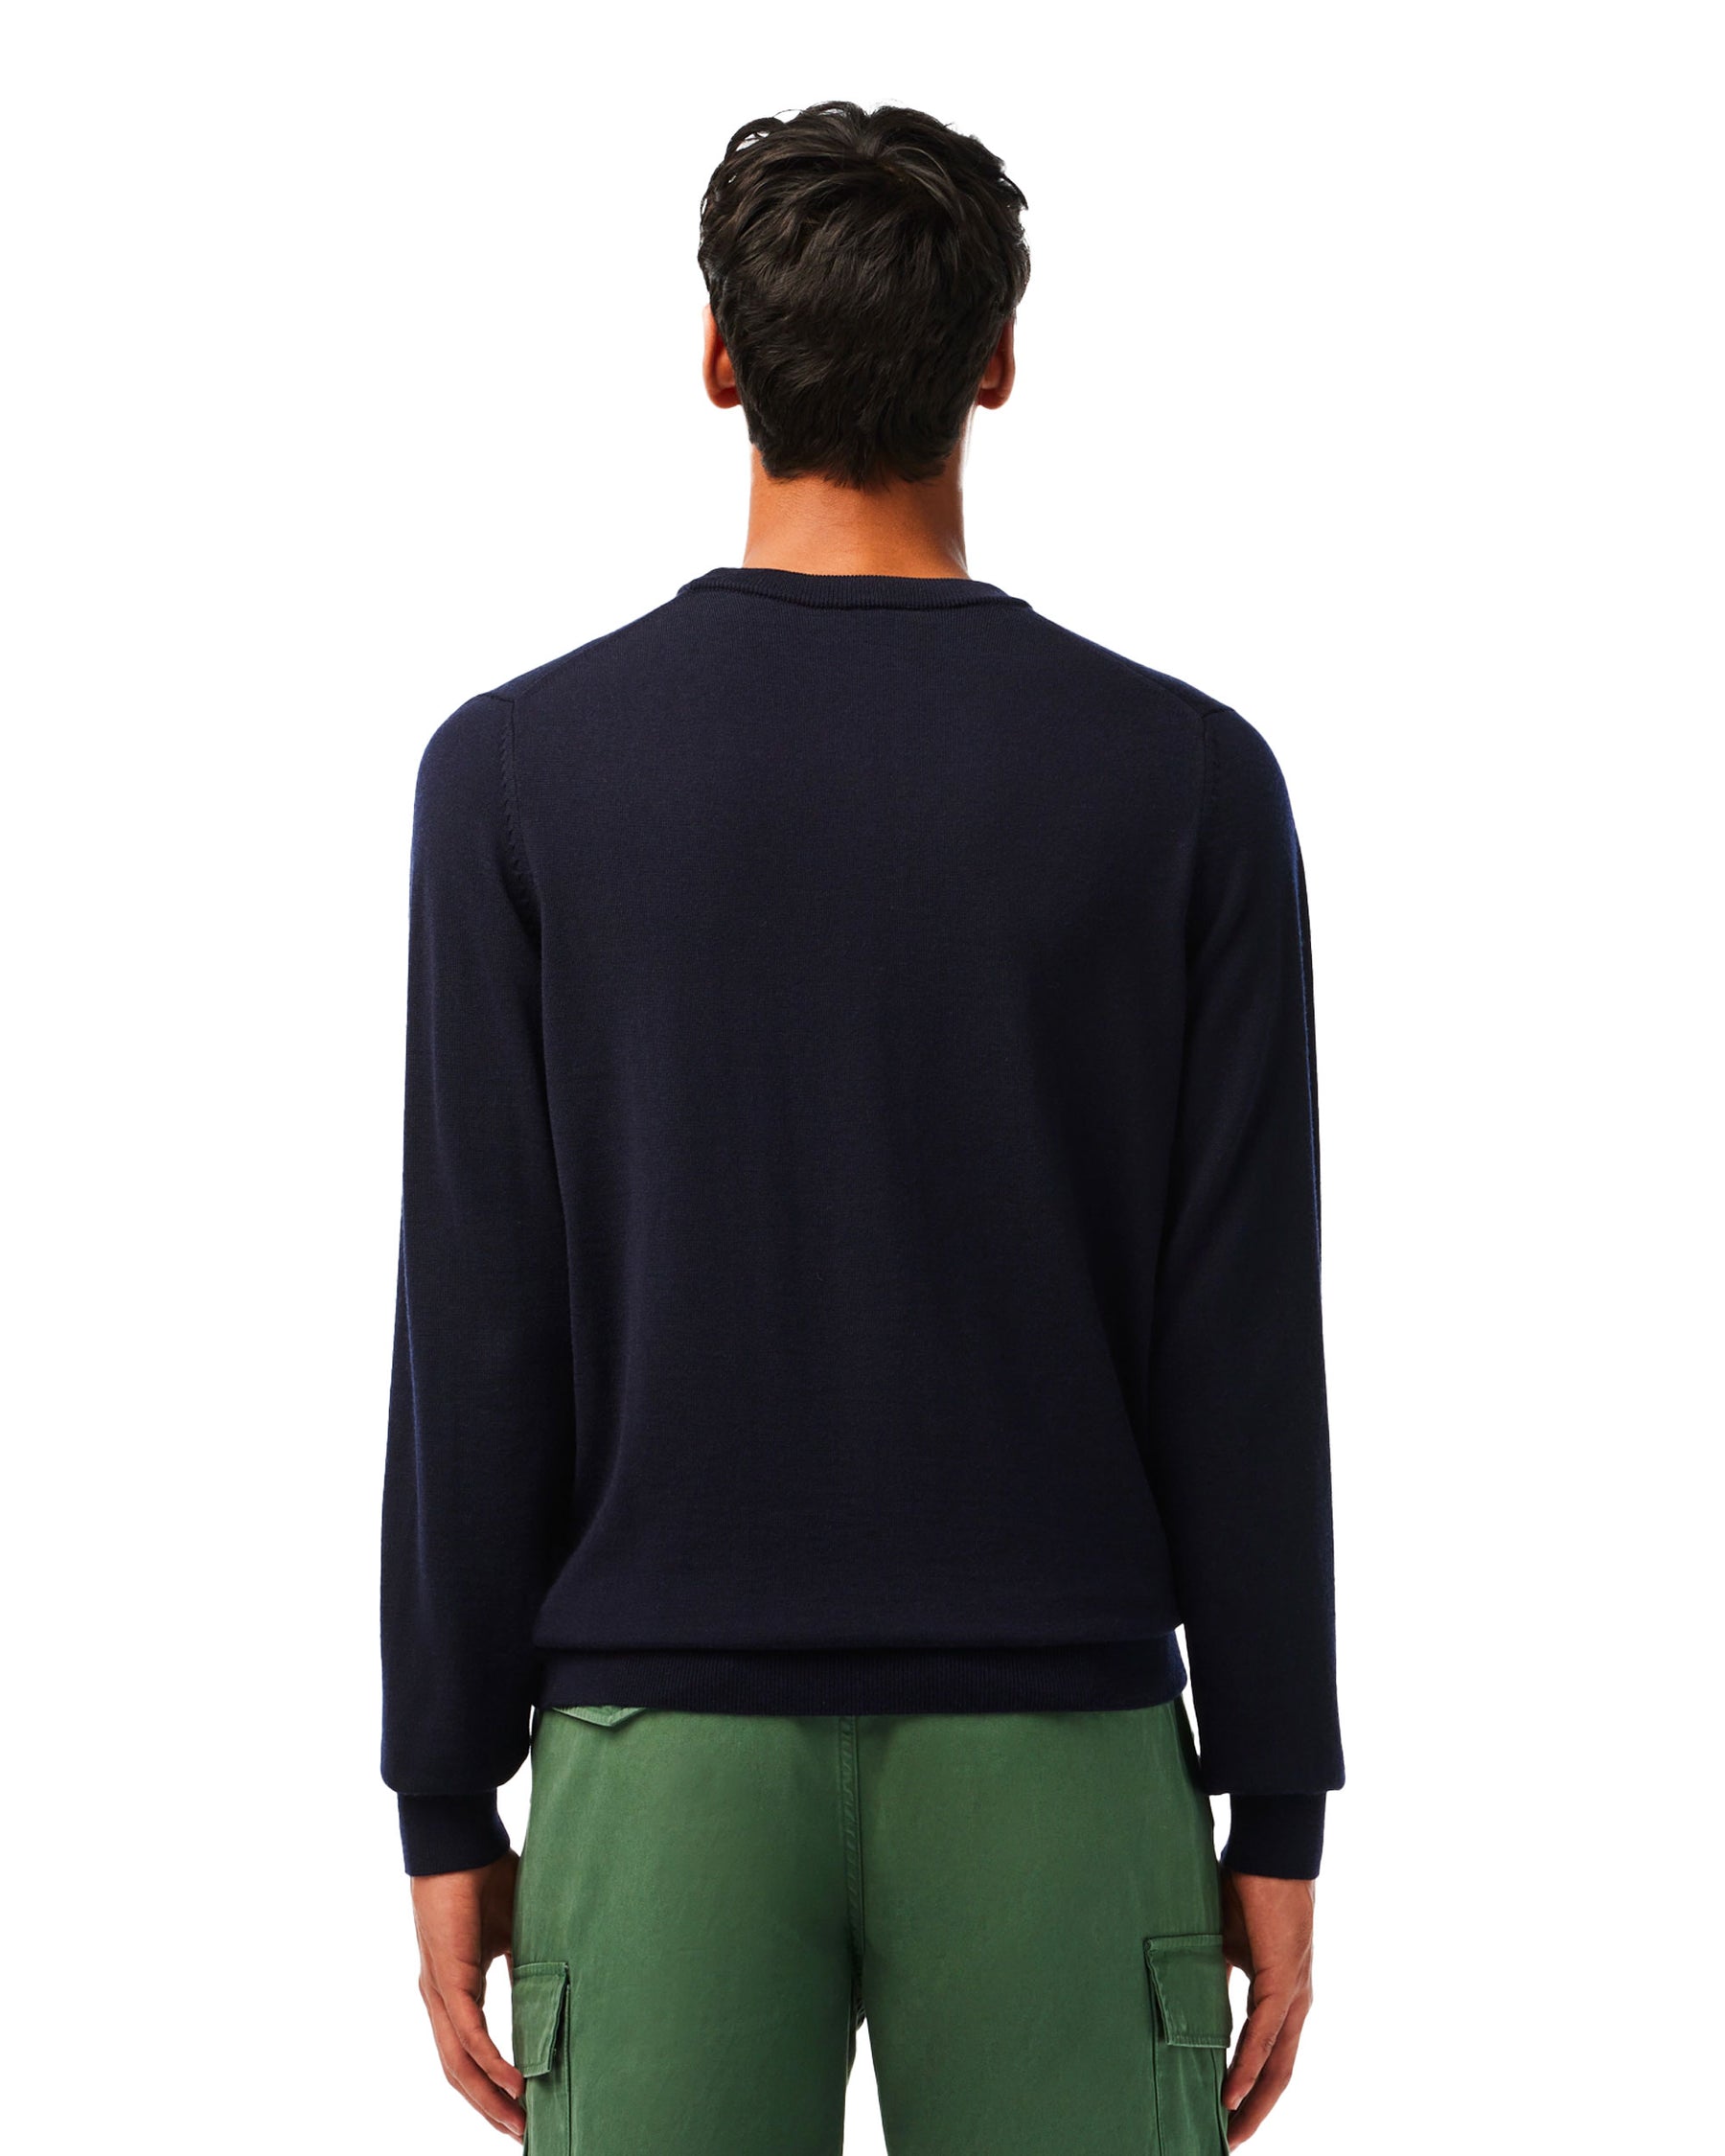 Man Sweater Lacoste Basic Blue